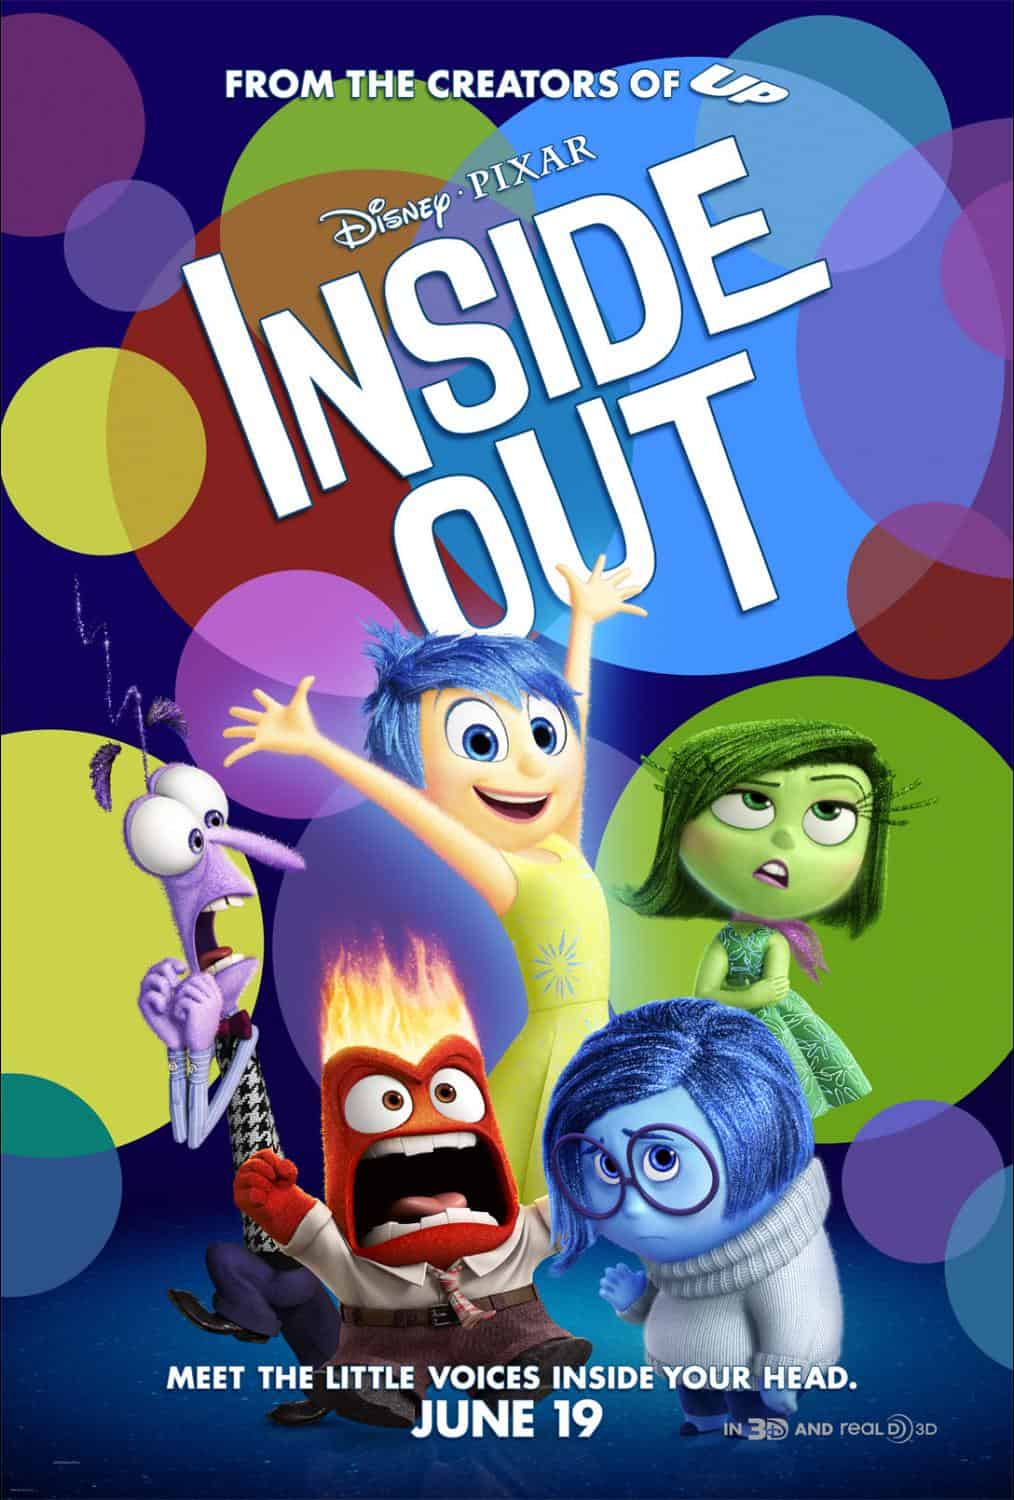 Disney Pixar's INSIDE OUT & LAVA Media Event at Pixar Animation Studios  #PixarInsideOut - 5 Minutes for Mom